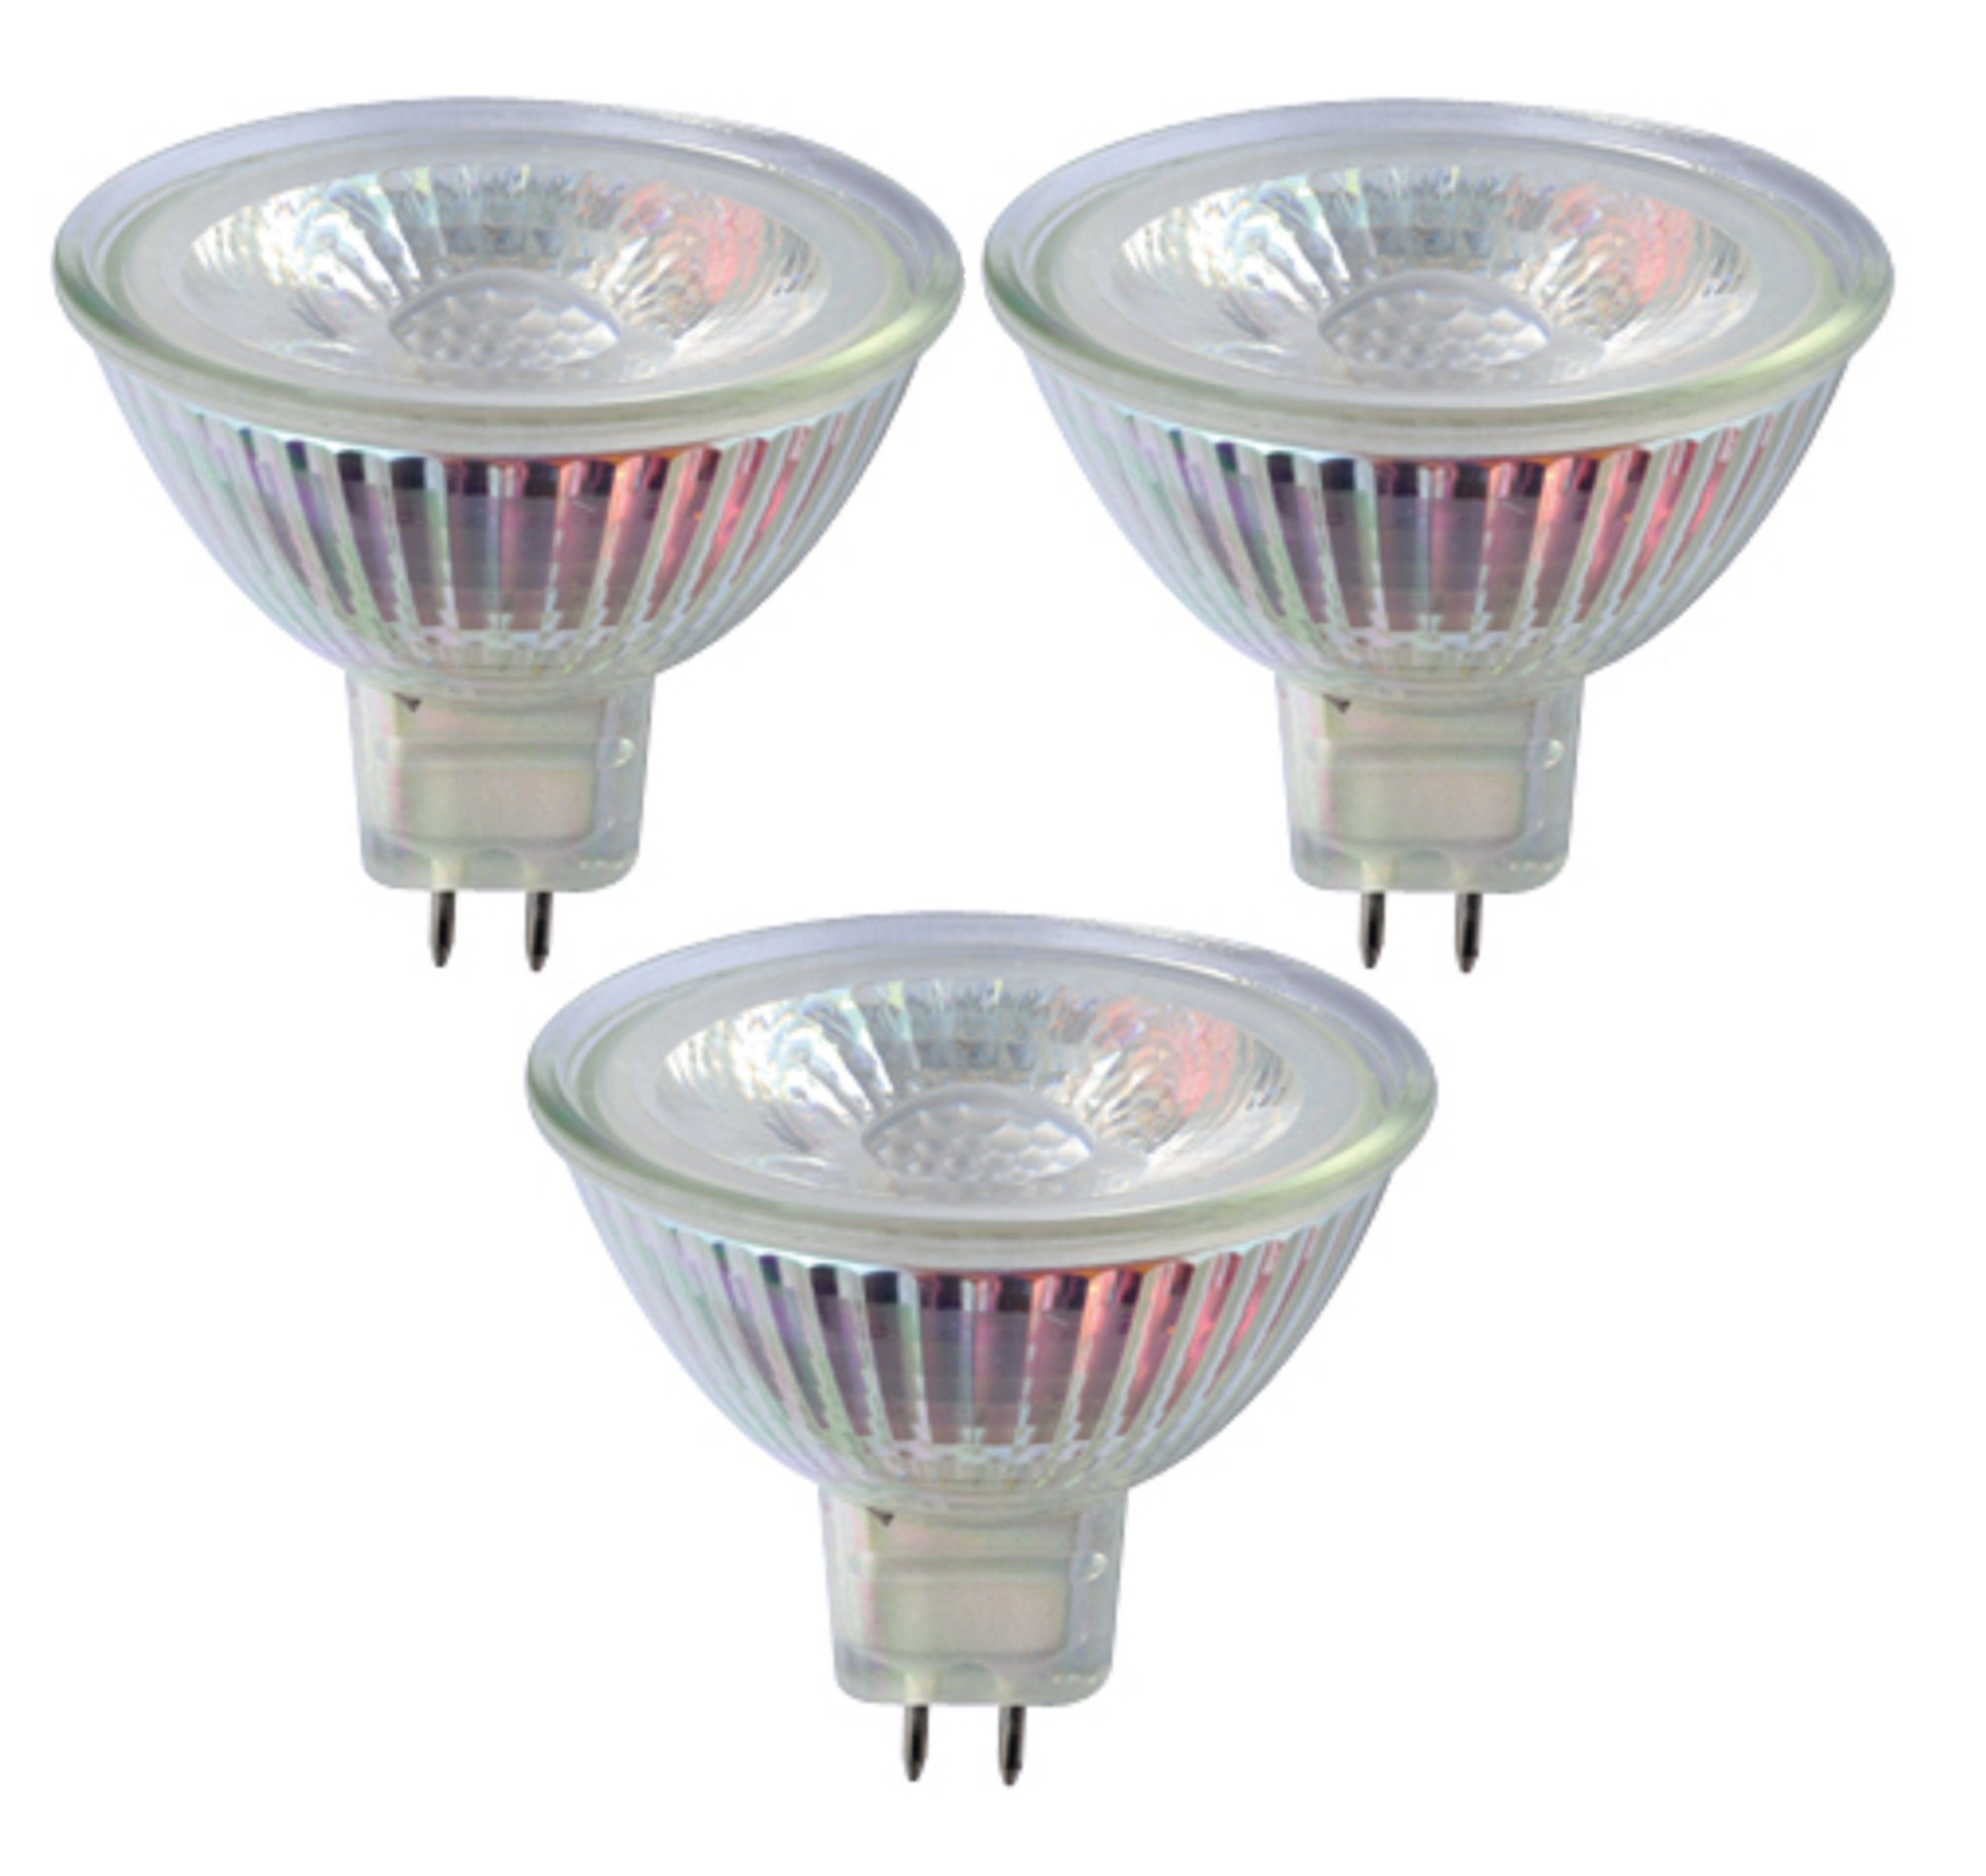 TRANGO LED-Leuchtmittel, 3er Set MR16-NT3 LED Луковицы mit MR16 Fassung zum Austausch herkömmlicher Halogen Луковицы MR16 I GU5.3 I G4 12 Volt 3000K, 3 St., Glühlampe, Reflektor Lampe, LED Birnen